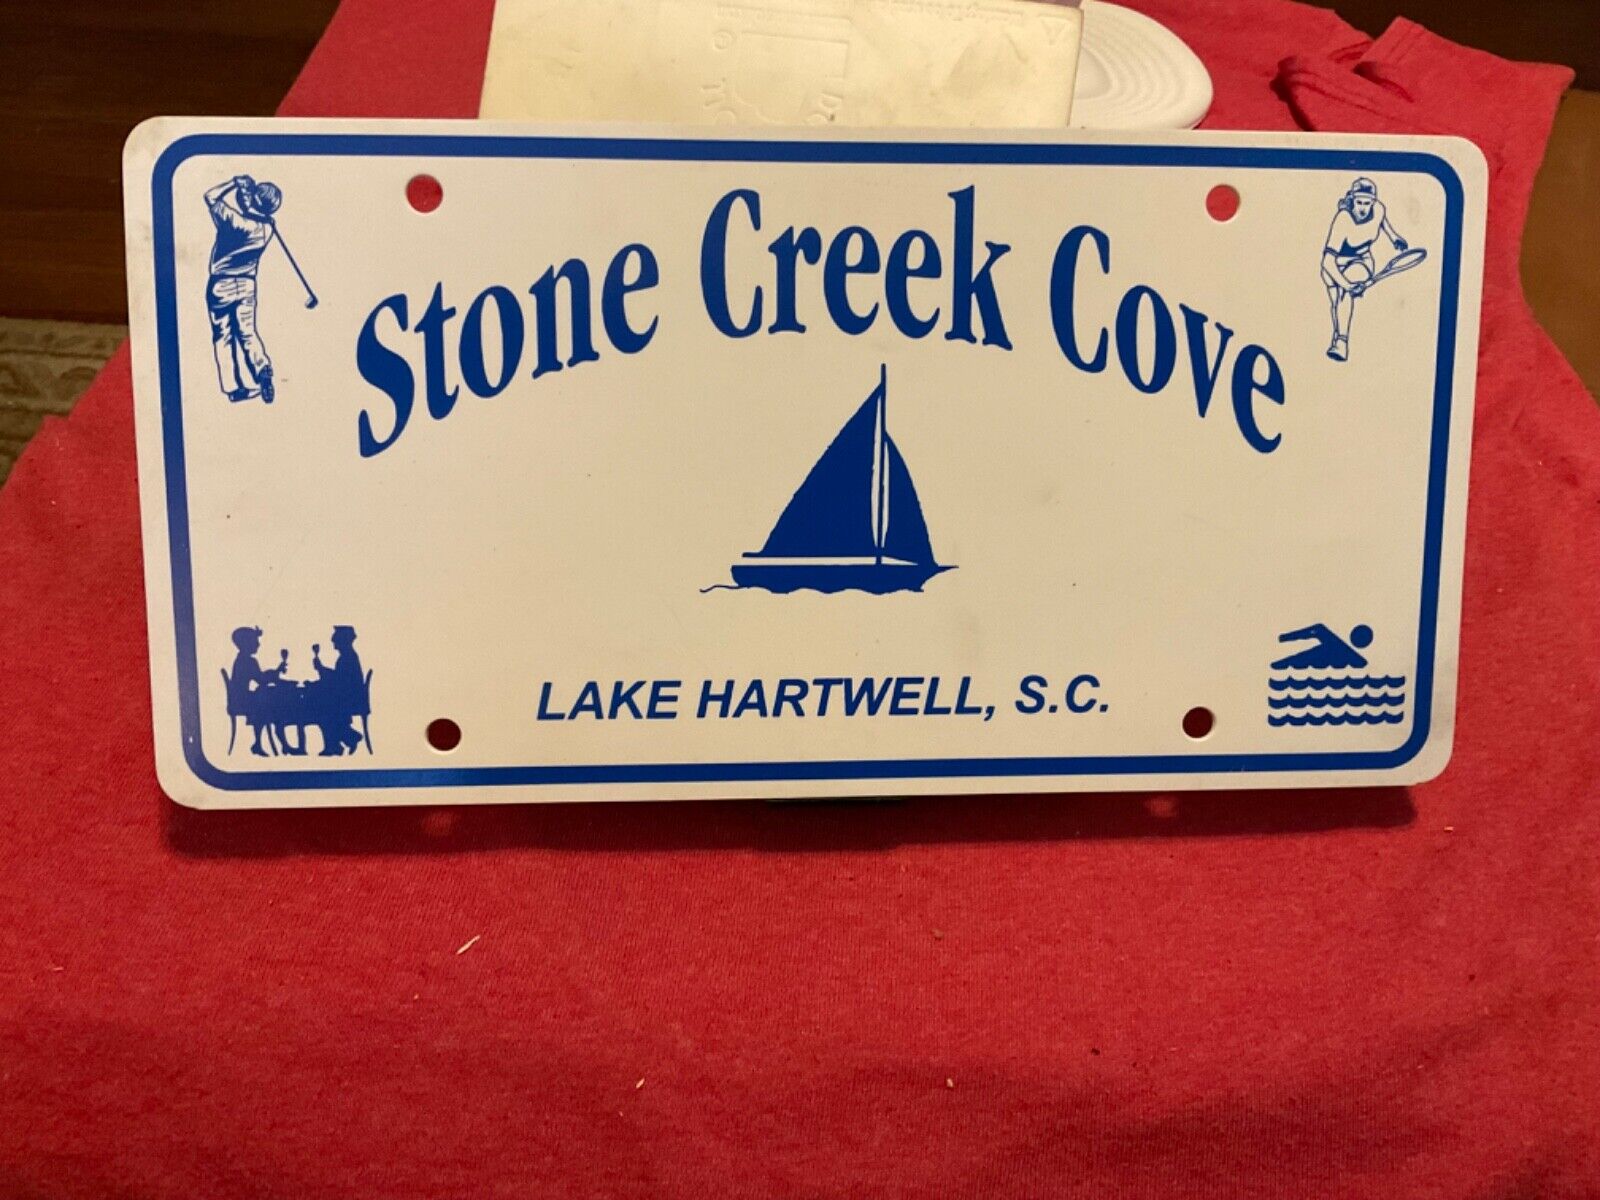 Stone Creek Cove Lake Hartwell SC South Carolina Booster License Plate Plastic